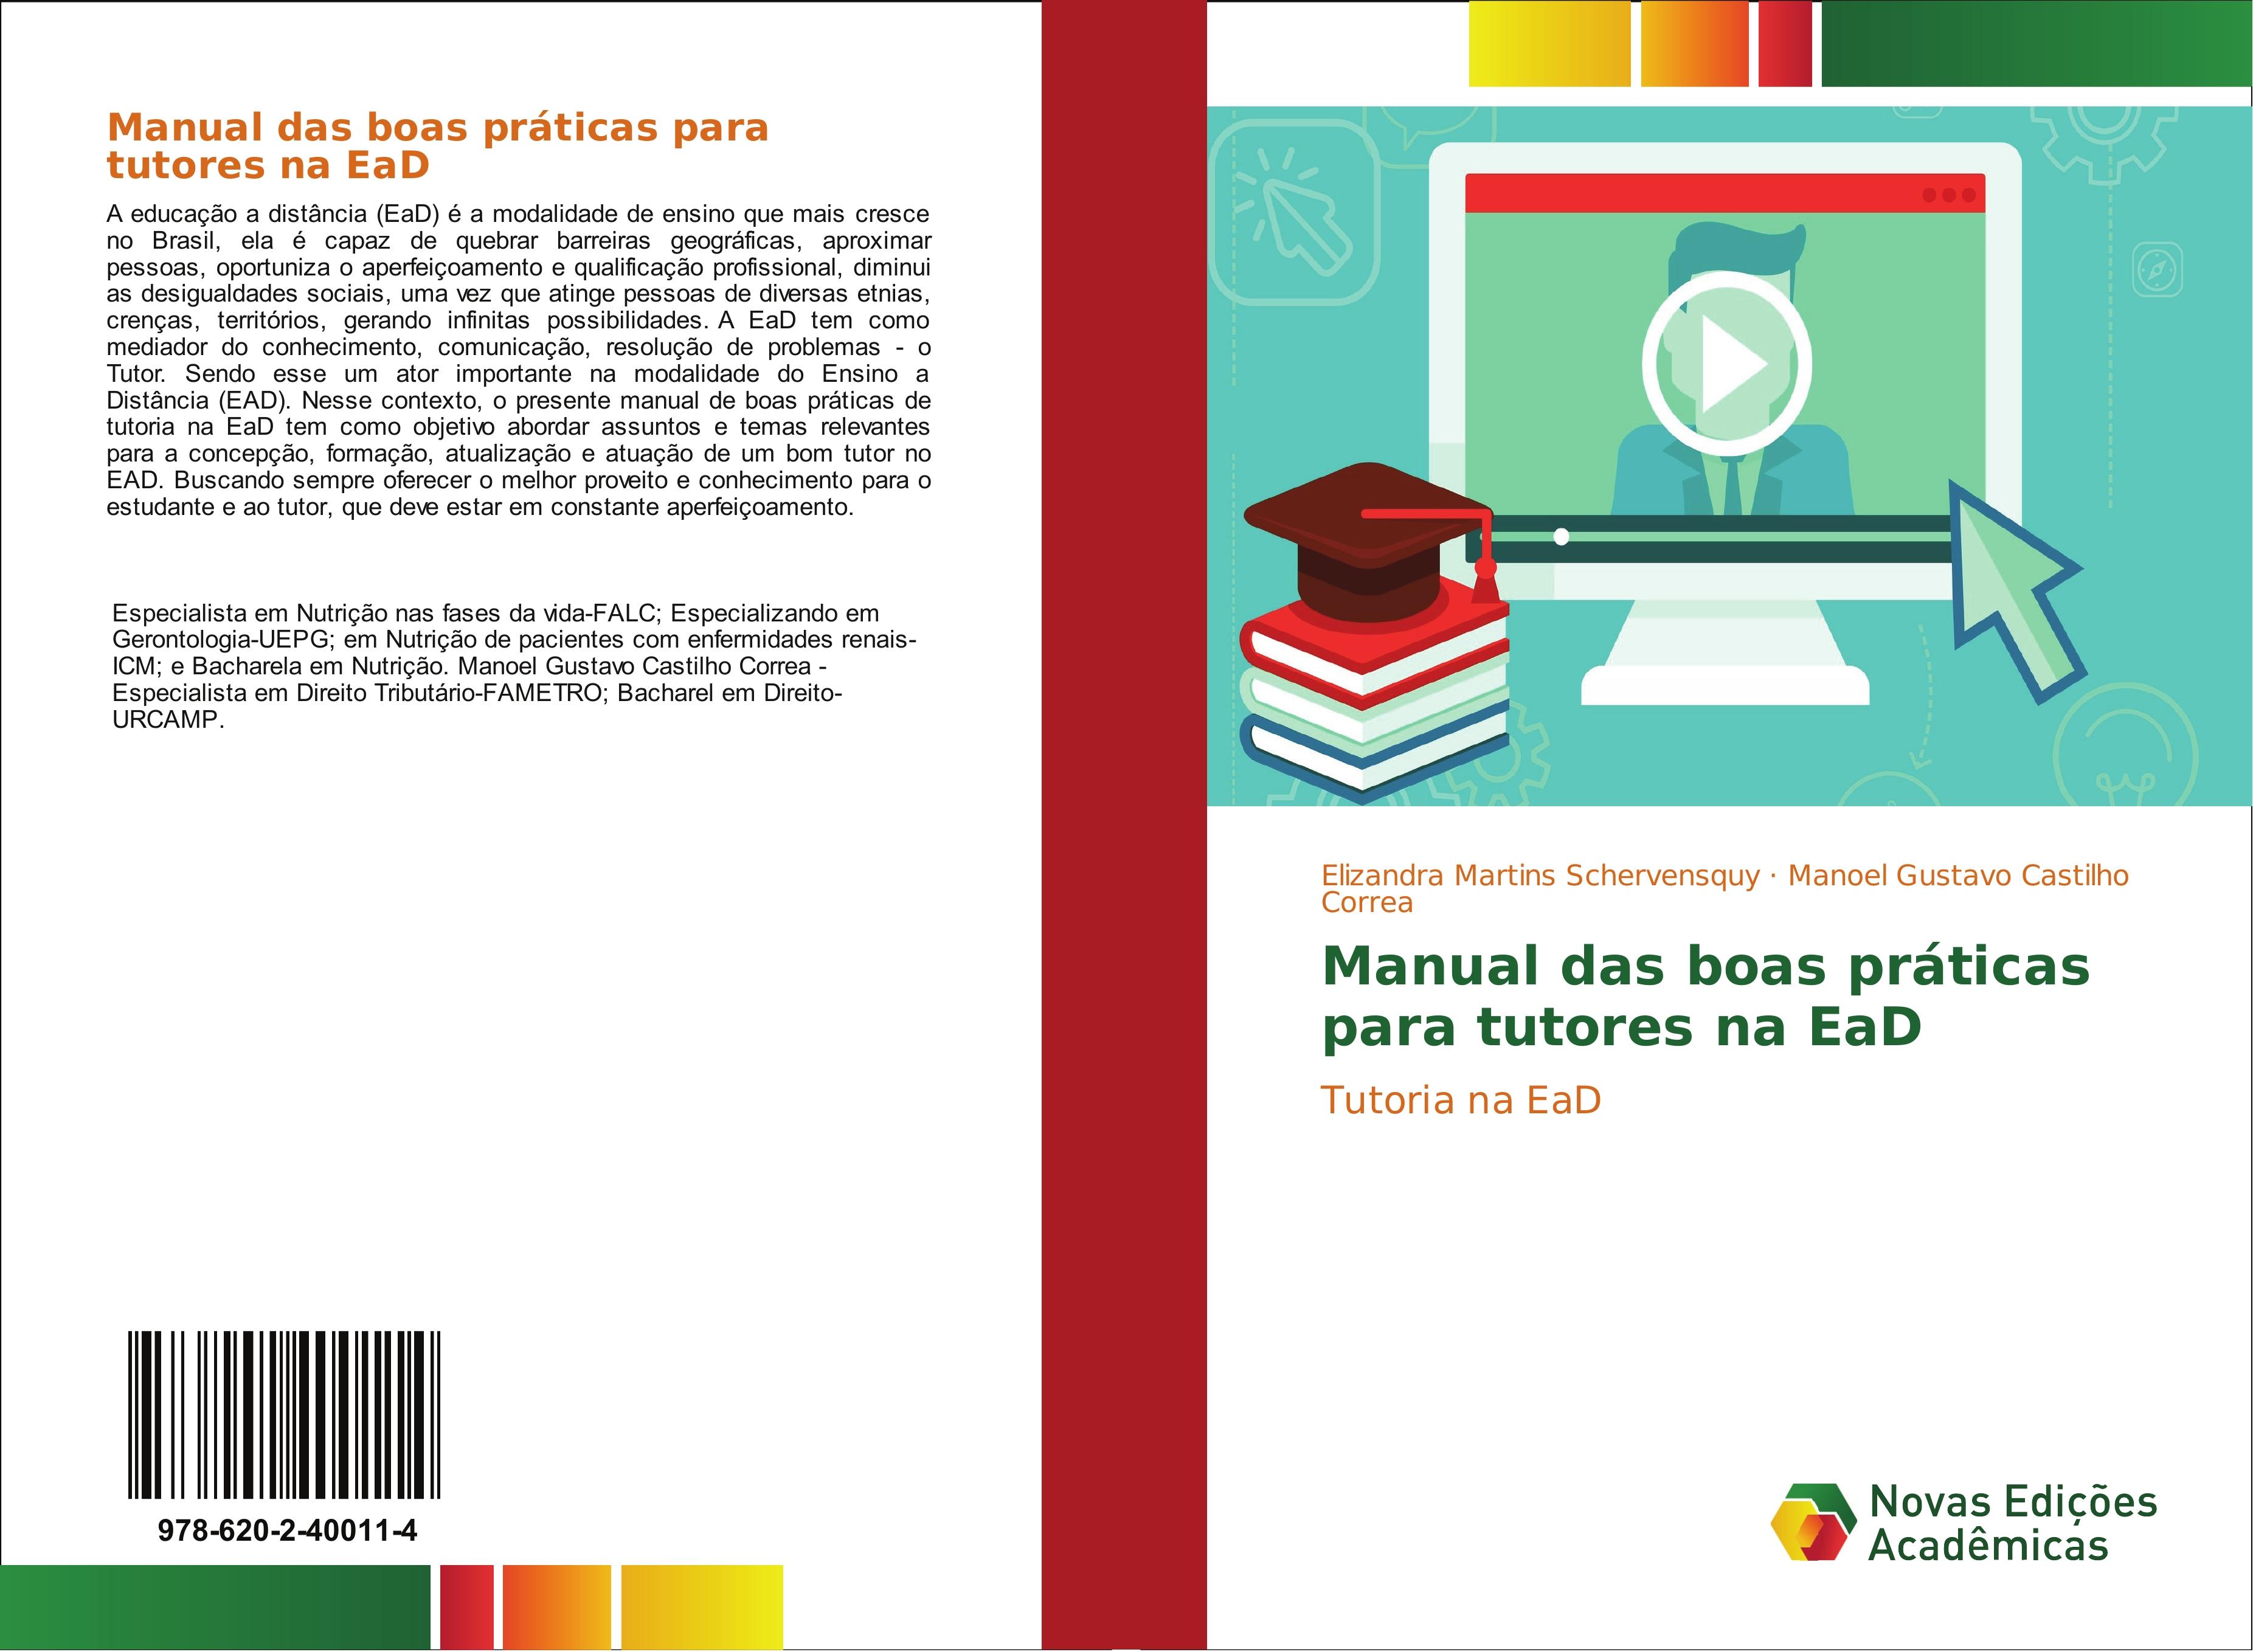 Manual das boas práticas para tutores na EaD - Elizandra Martins Schervensquy Manoel Gustavo Castilho Correa